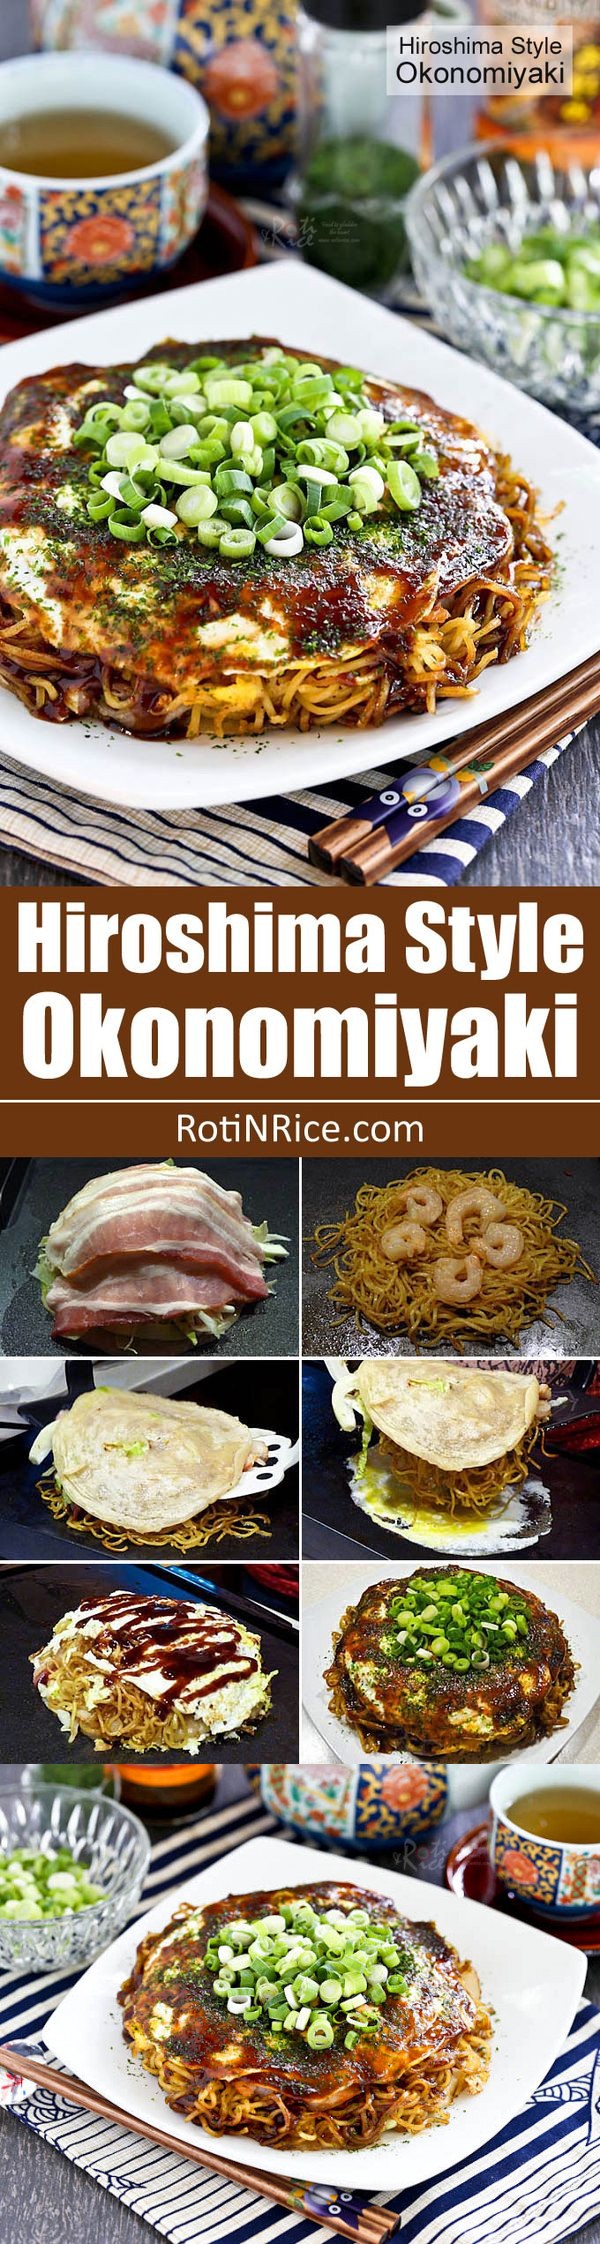 Hiroshima Style Okonomiyaki (Japanese Layered Pancakes